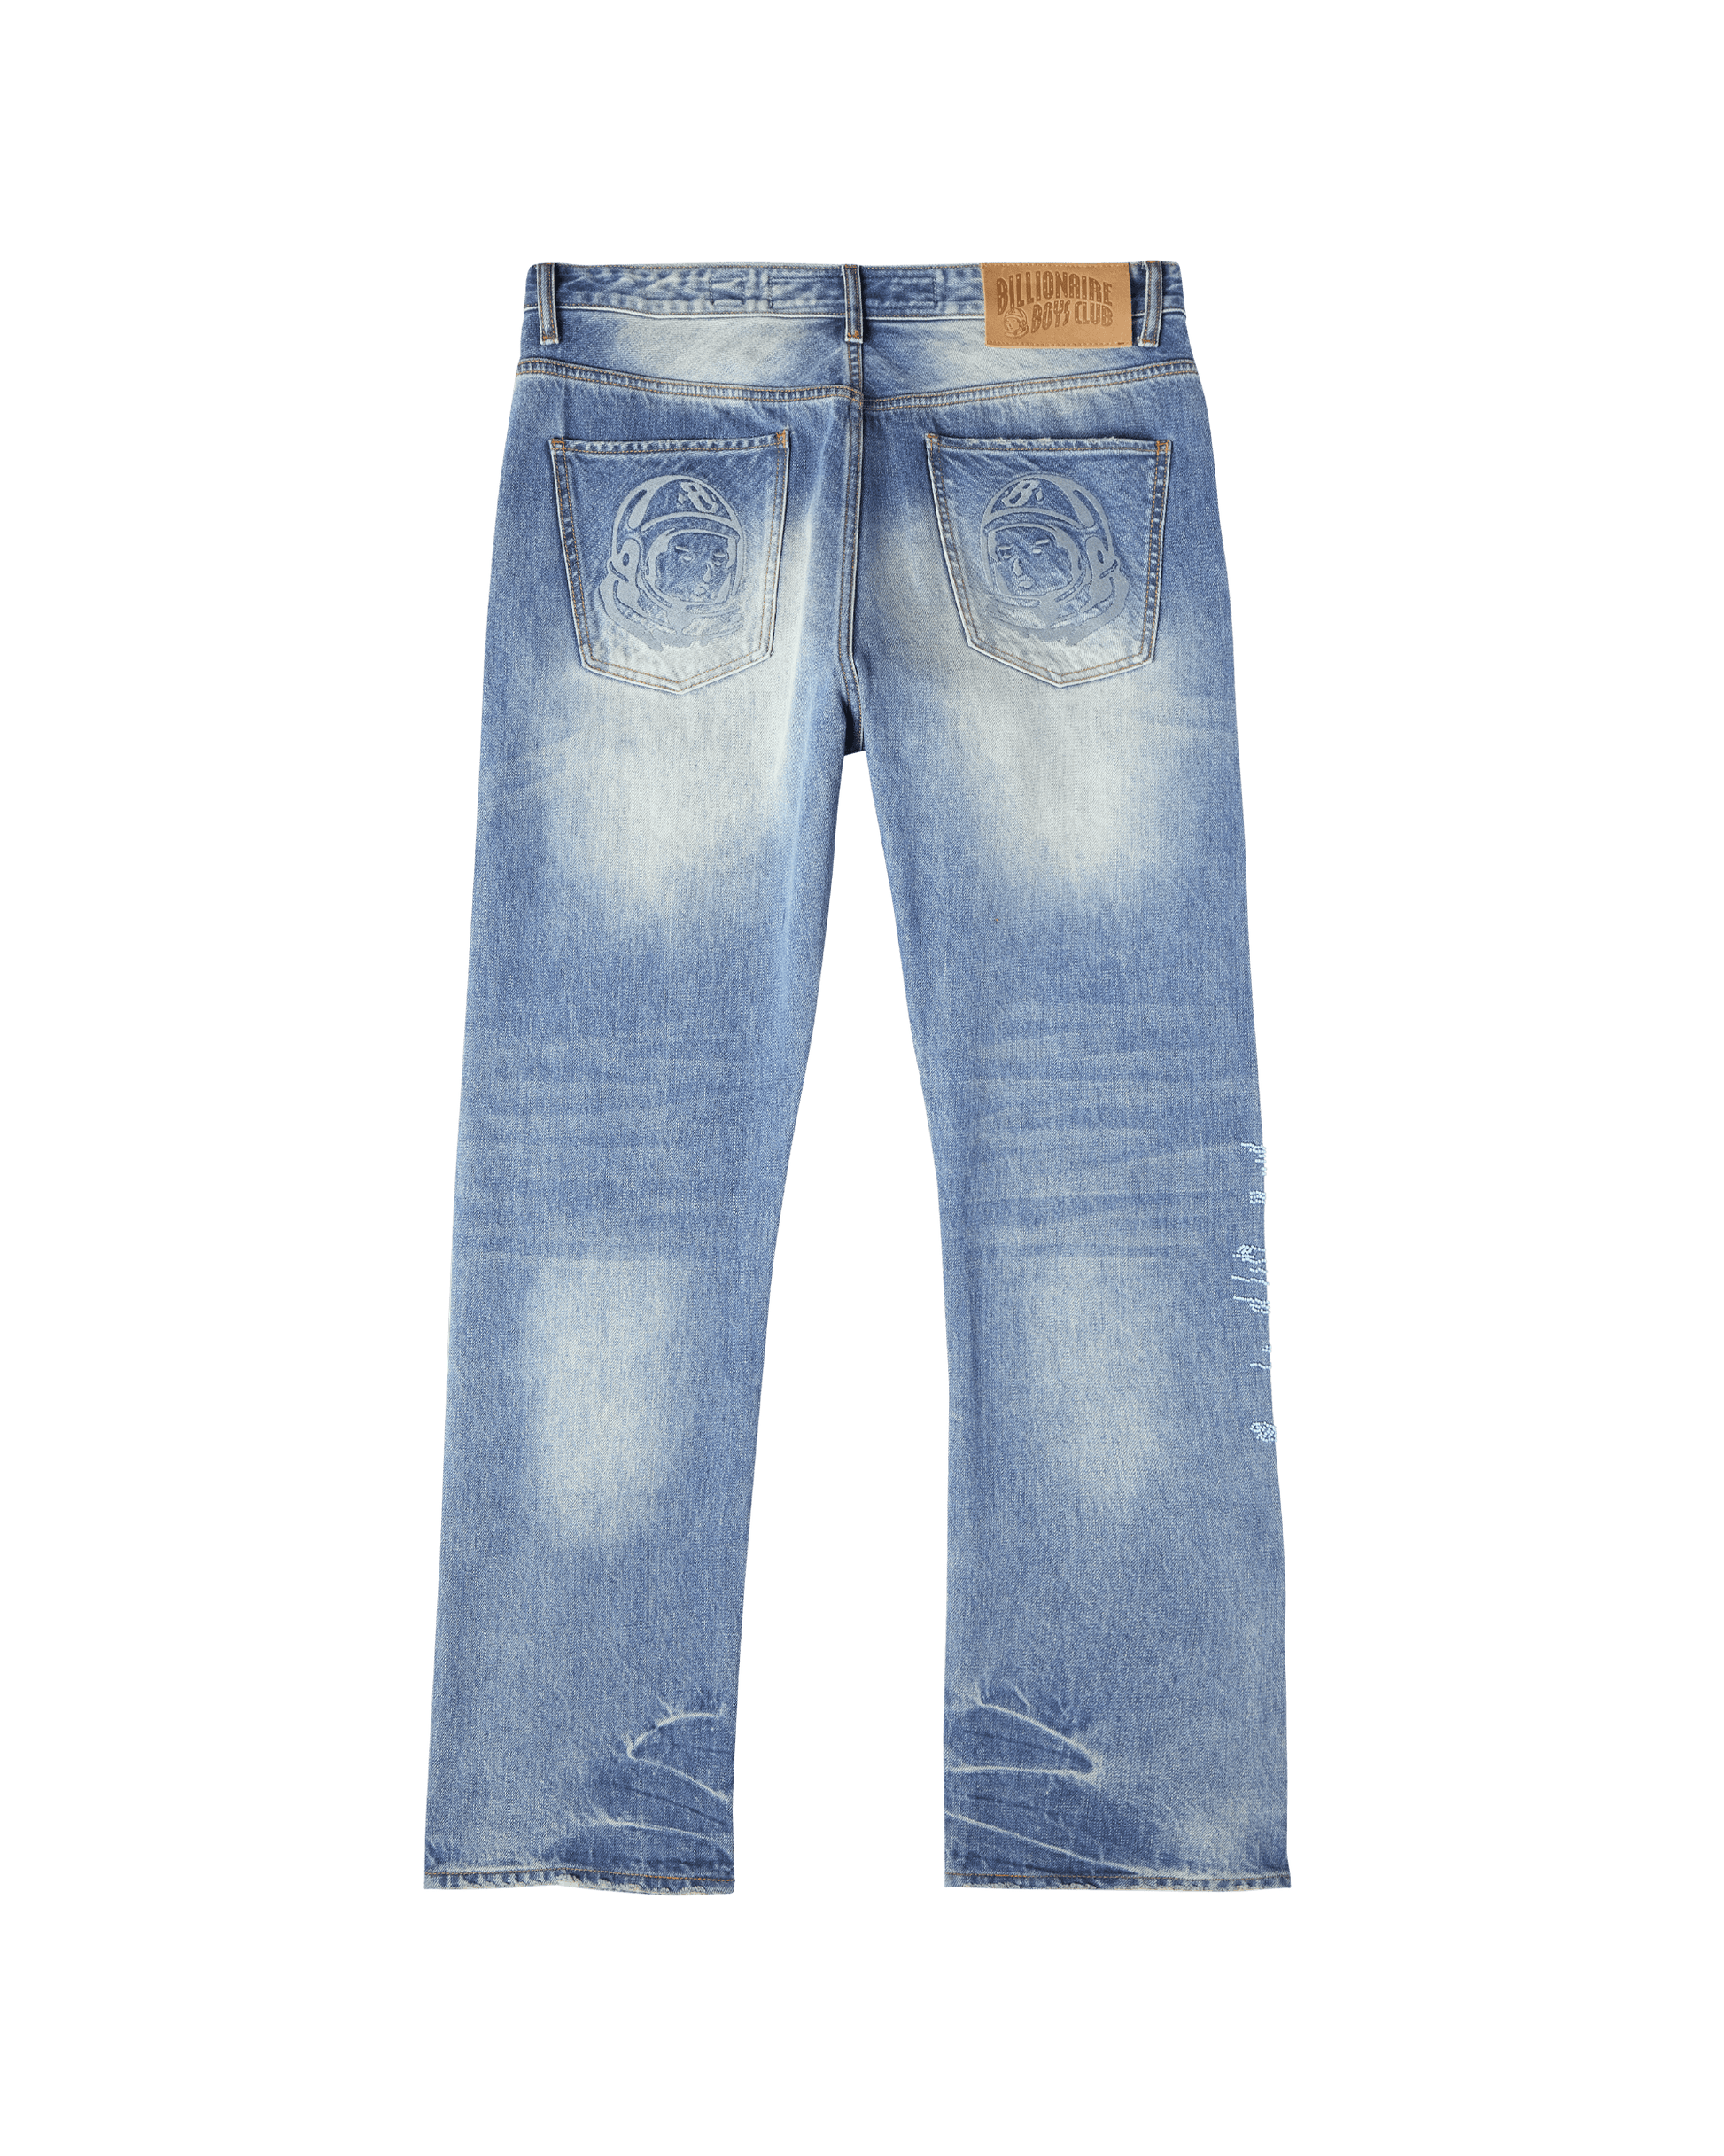 Starcrossed Jeans - Billionaire Boys Club